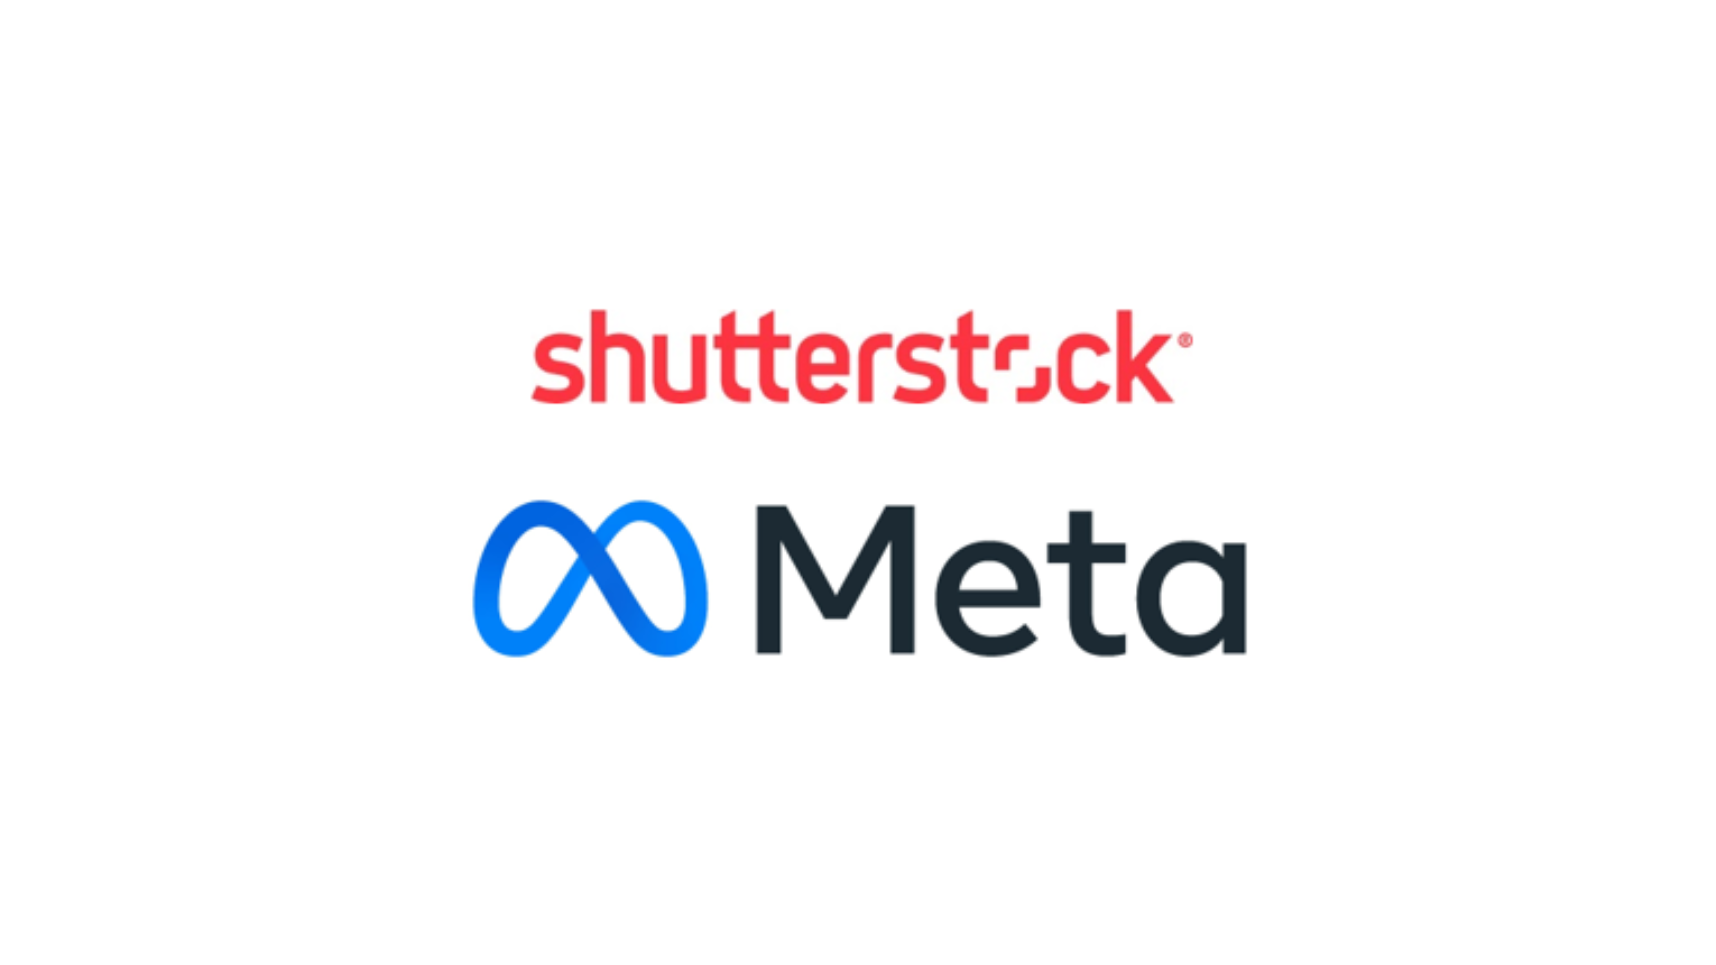 Shutterstock rewards artists who contribute to generative AI